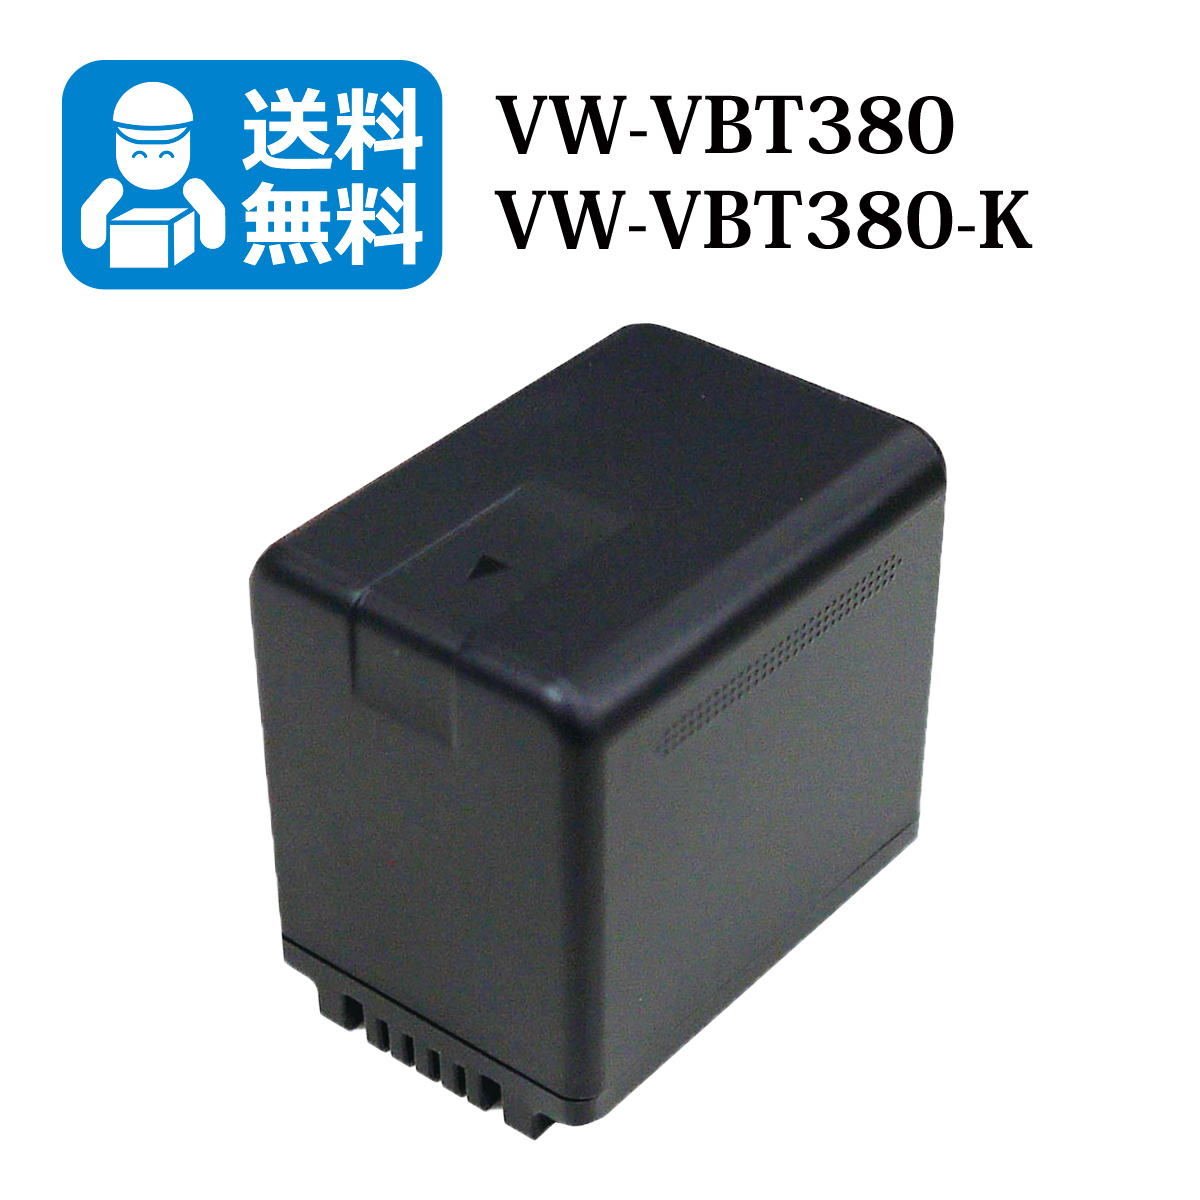 VW-VBT380-K Panasonic interchangeable battery 1 piece ( camera body . remainder amount display possibility )HC-W850M / HC-W870M / HC-WX970M / HC-WX990M / HC-WX995M